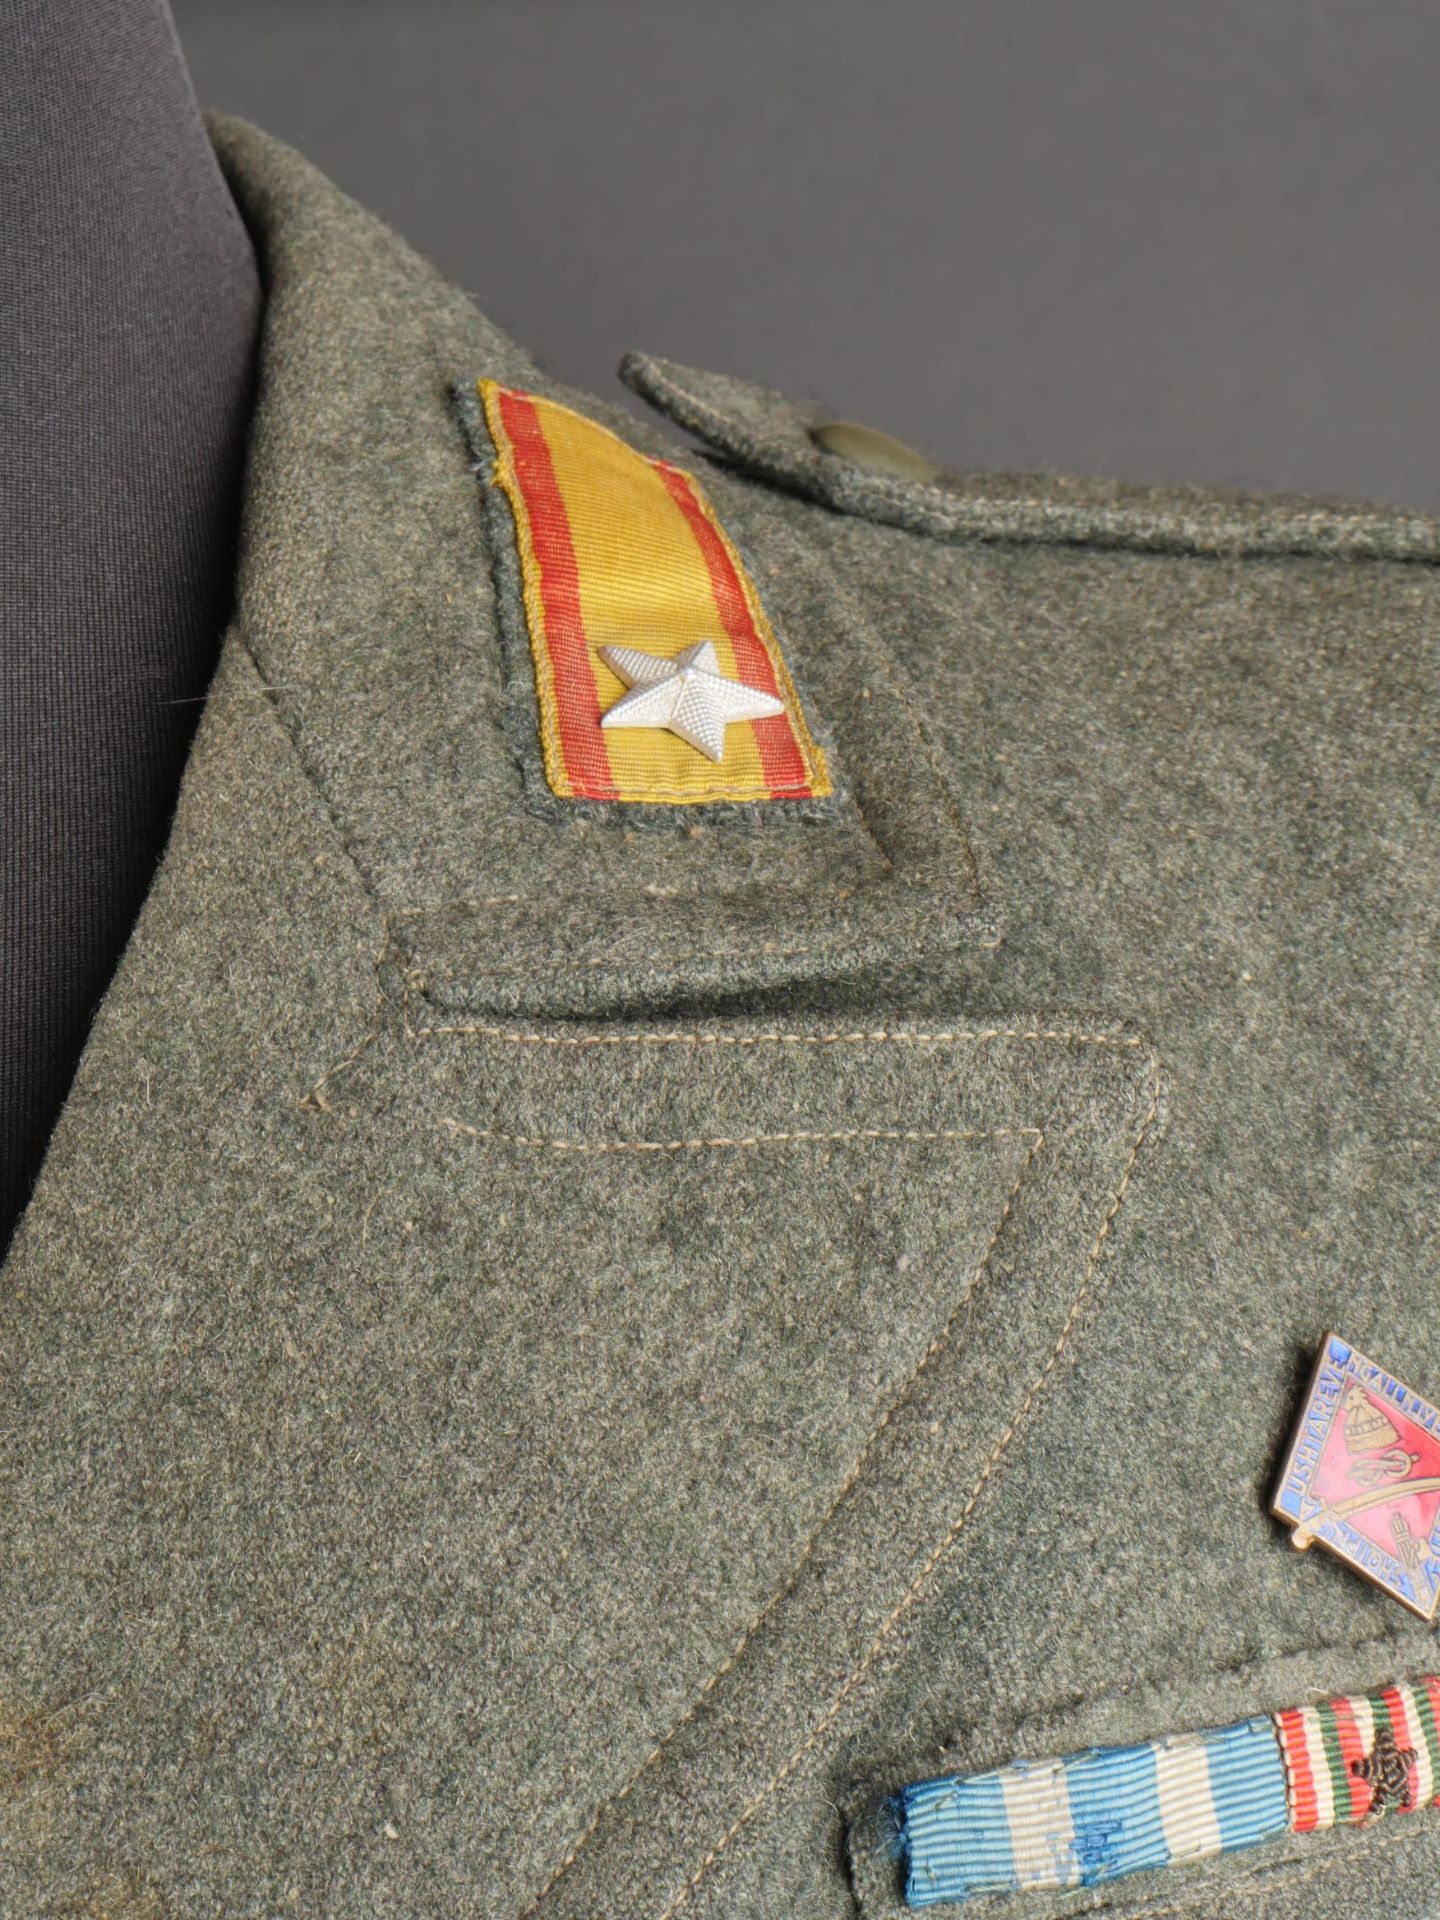 Vareuse de Lieutenant de la division Messina. Messina Division Lieutenant s jacket. - Image 7 of 19